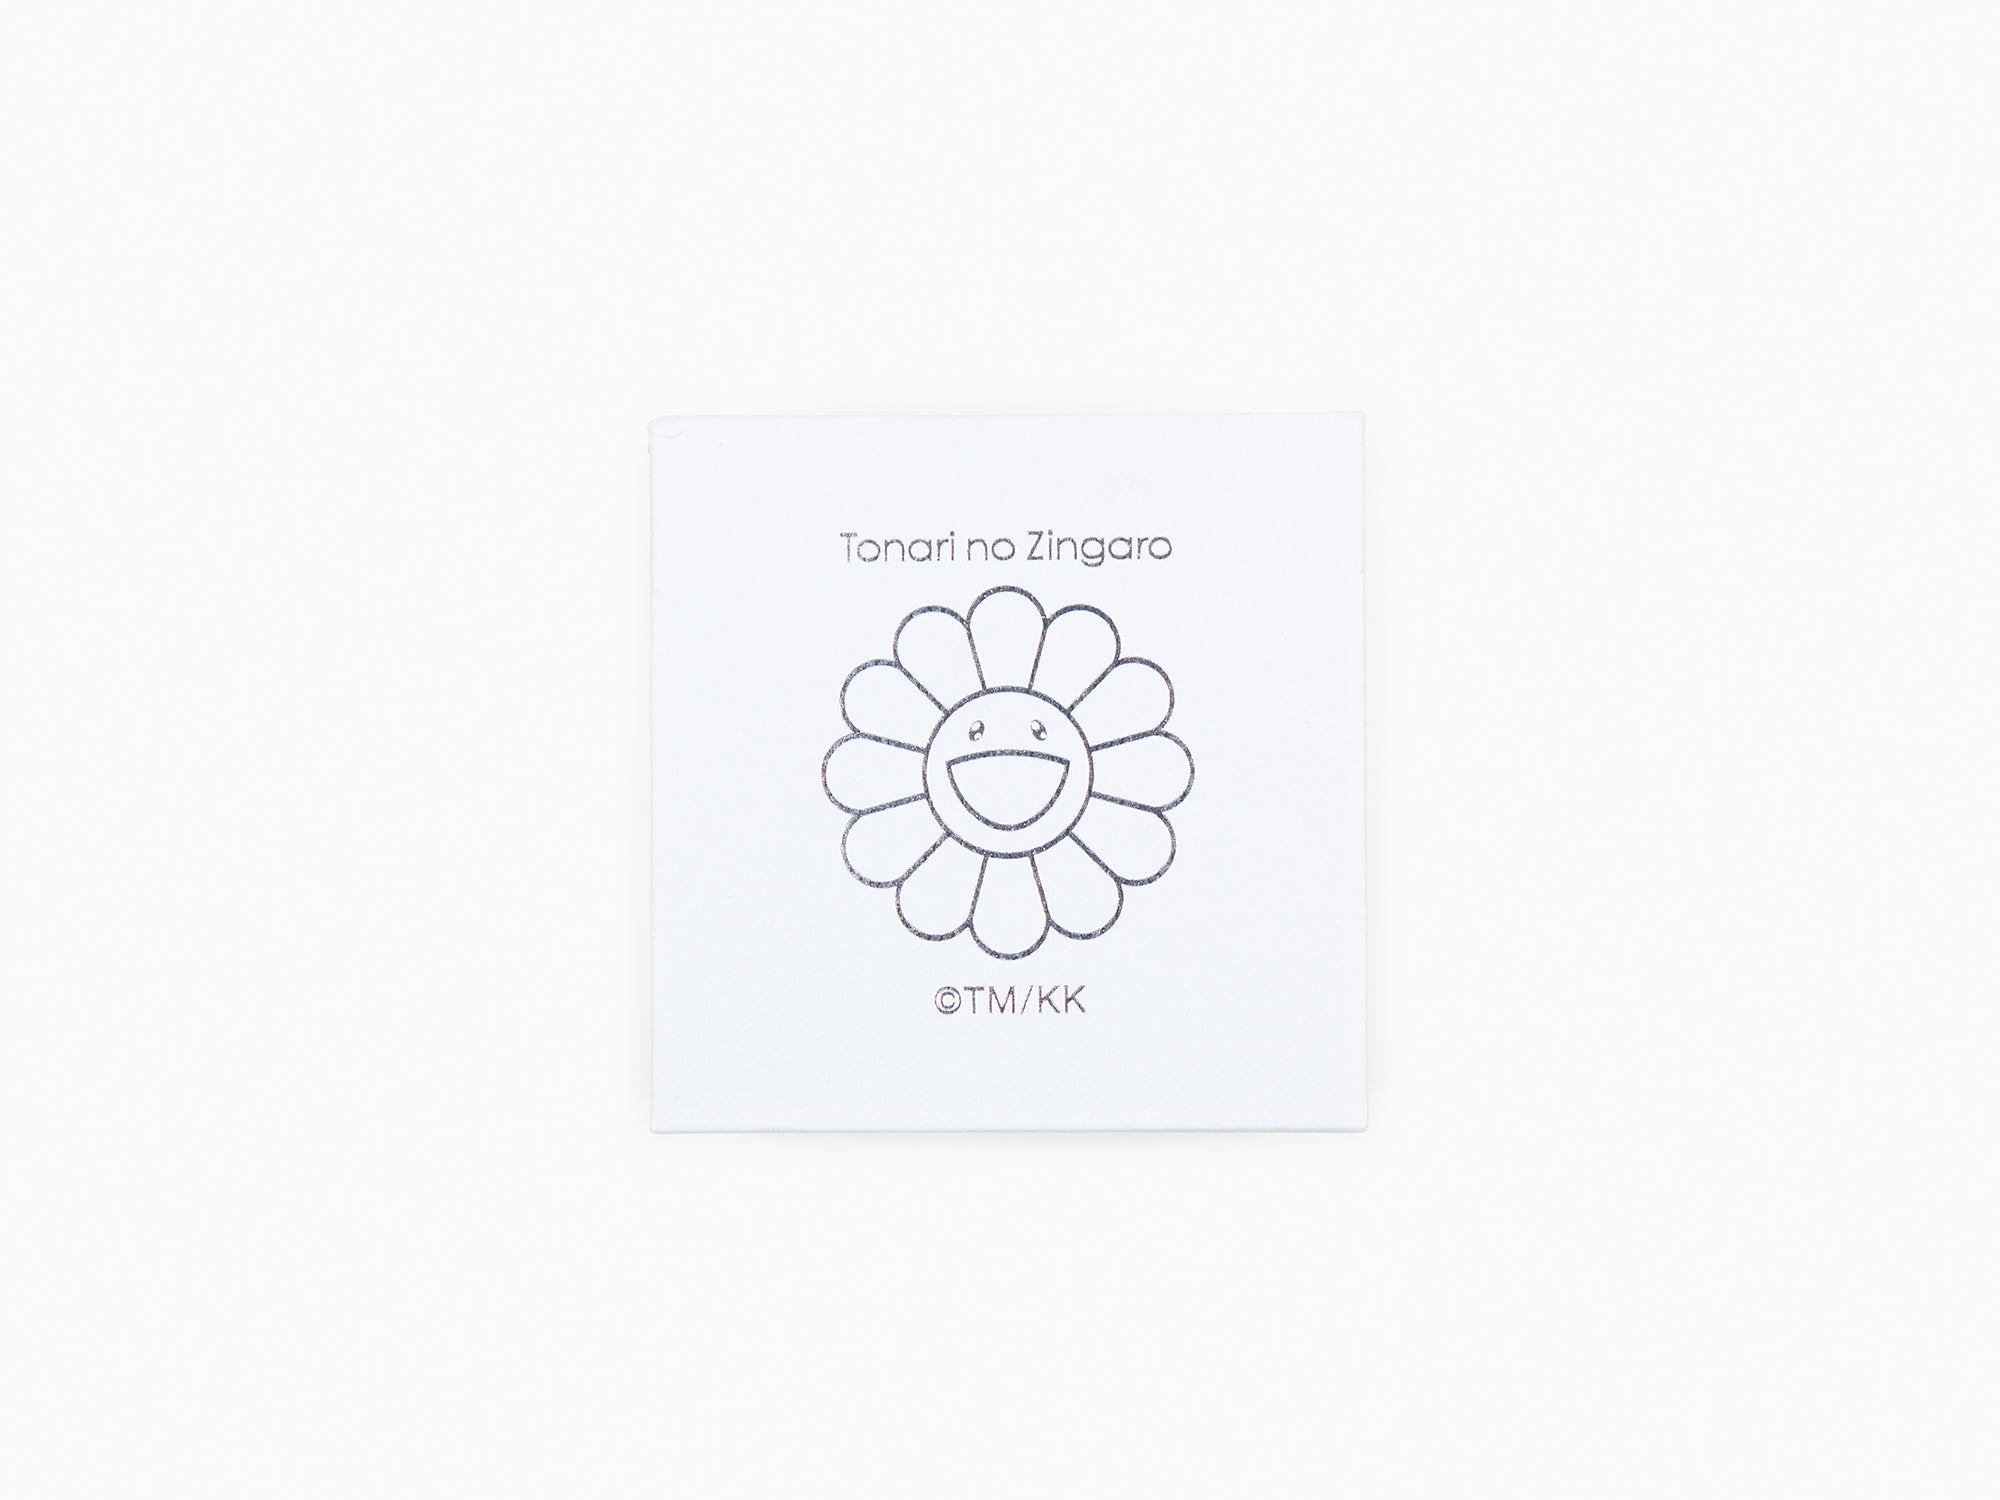 Takashi Murakami - Flower Plush Key Chain - Rainbow - Perrotin PARIS